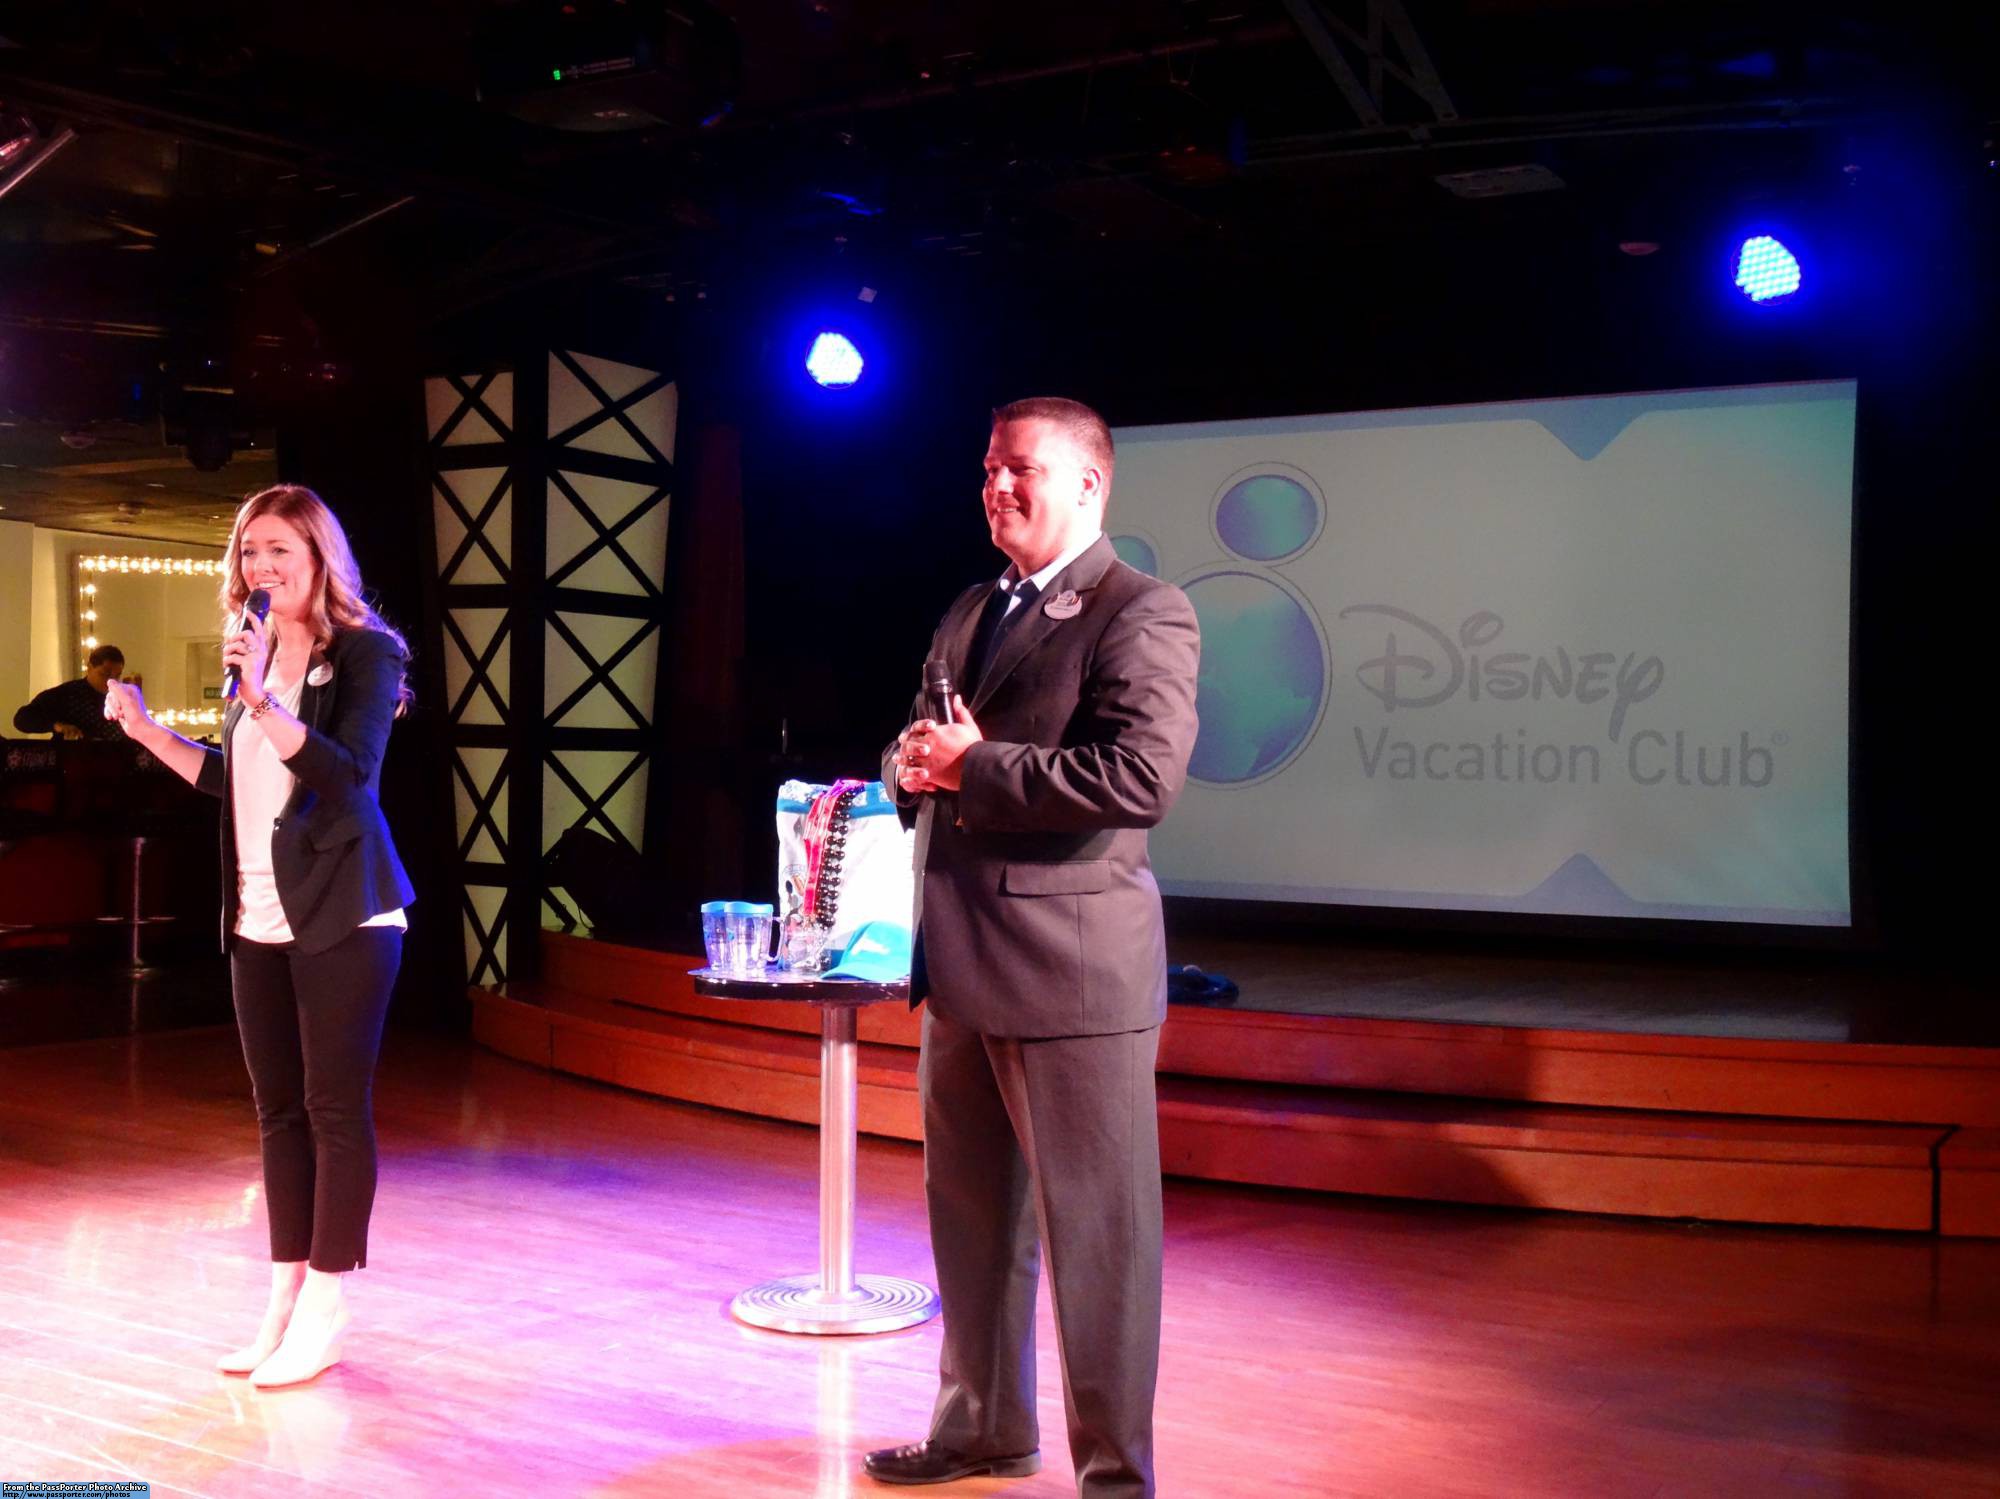 Disney Wonder - DVC member presentation